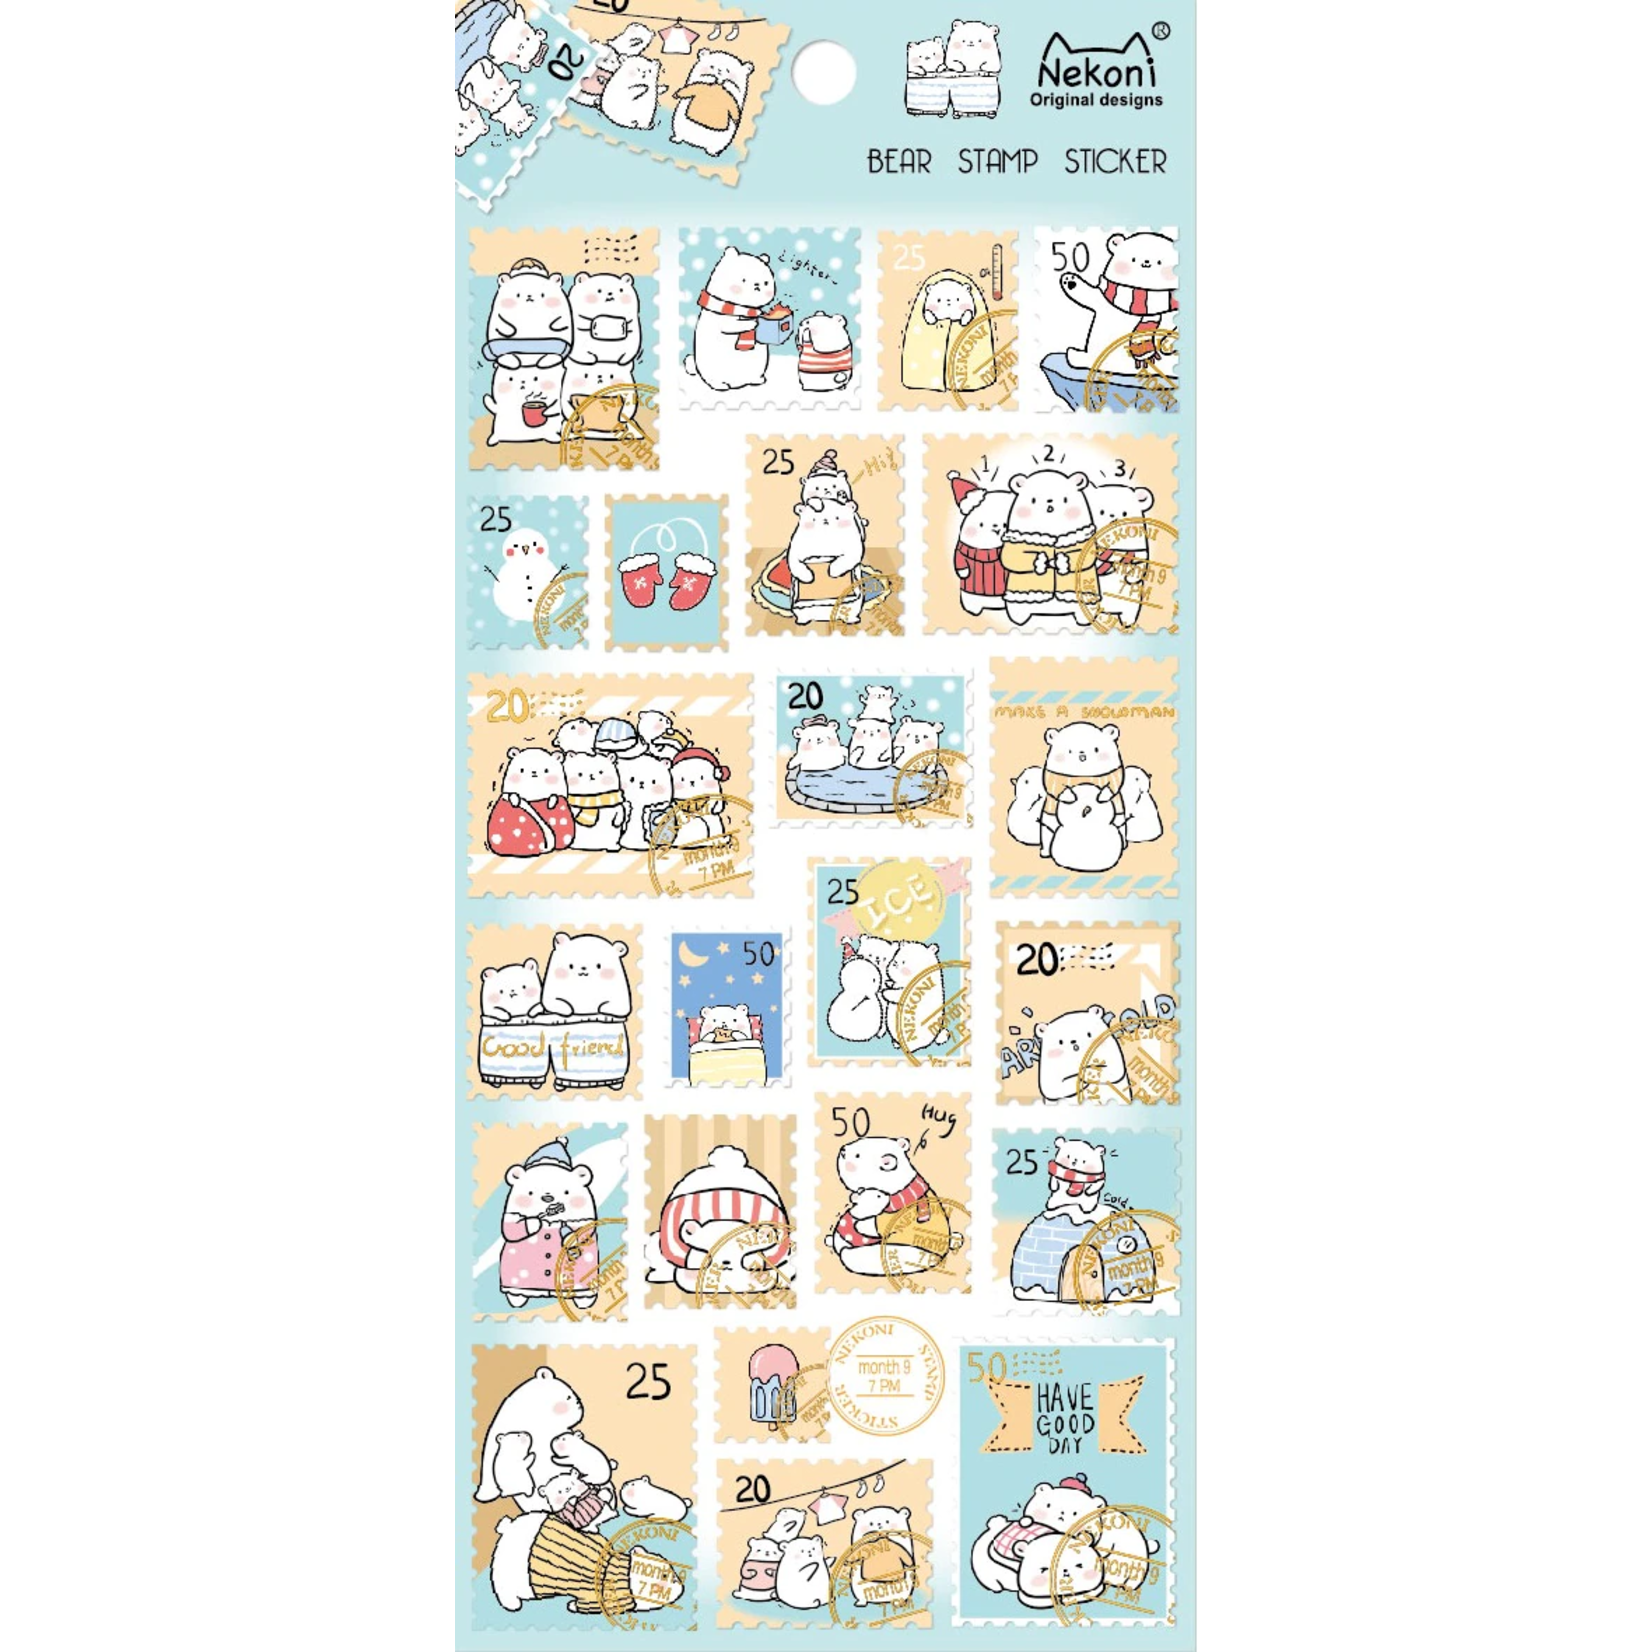 Nekoni Polar Bear Stamp Stickers - 50640